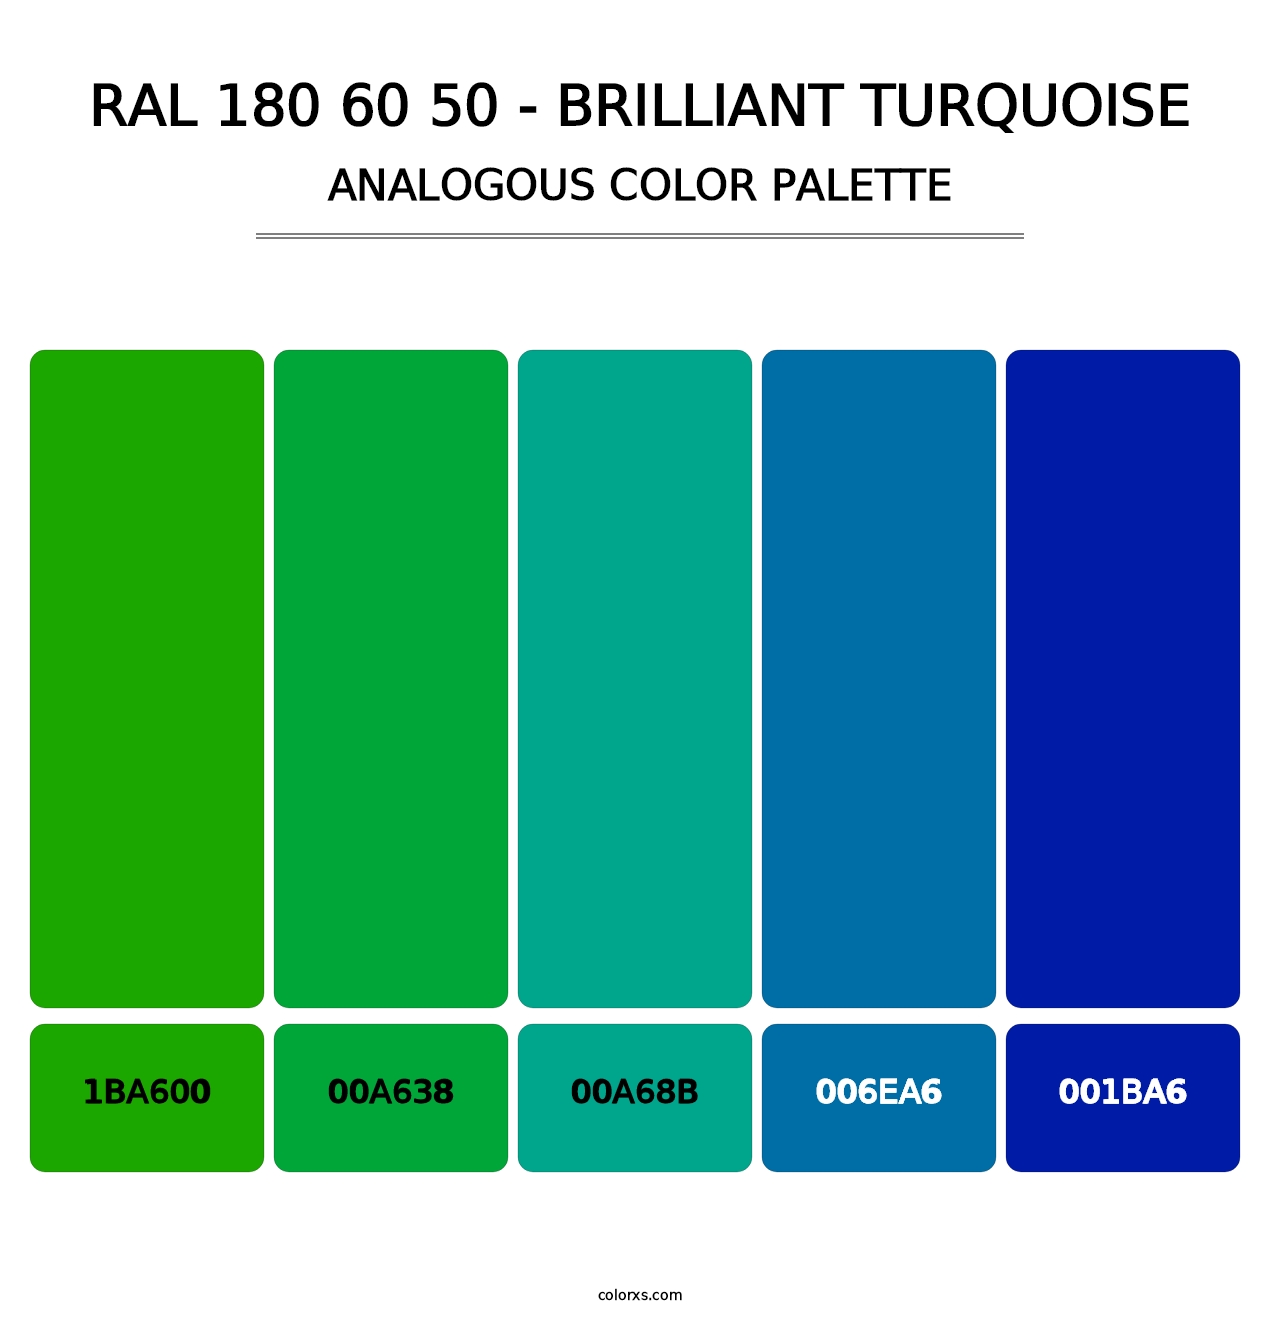 RAL 180 60 50 - Brilliant Turquoise - Analogous Color Palette